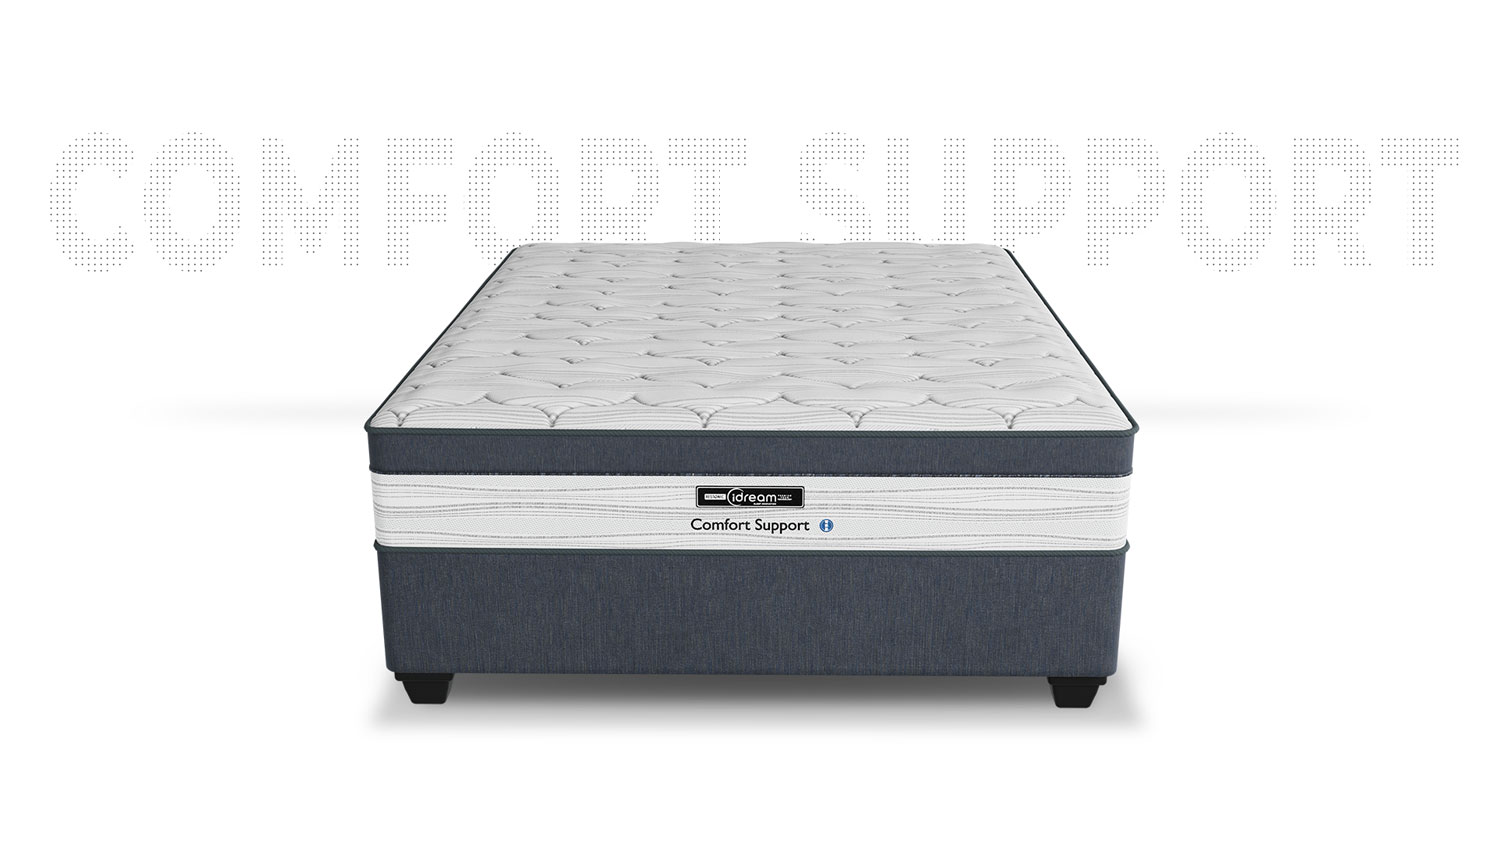 idream comfort support bed